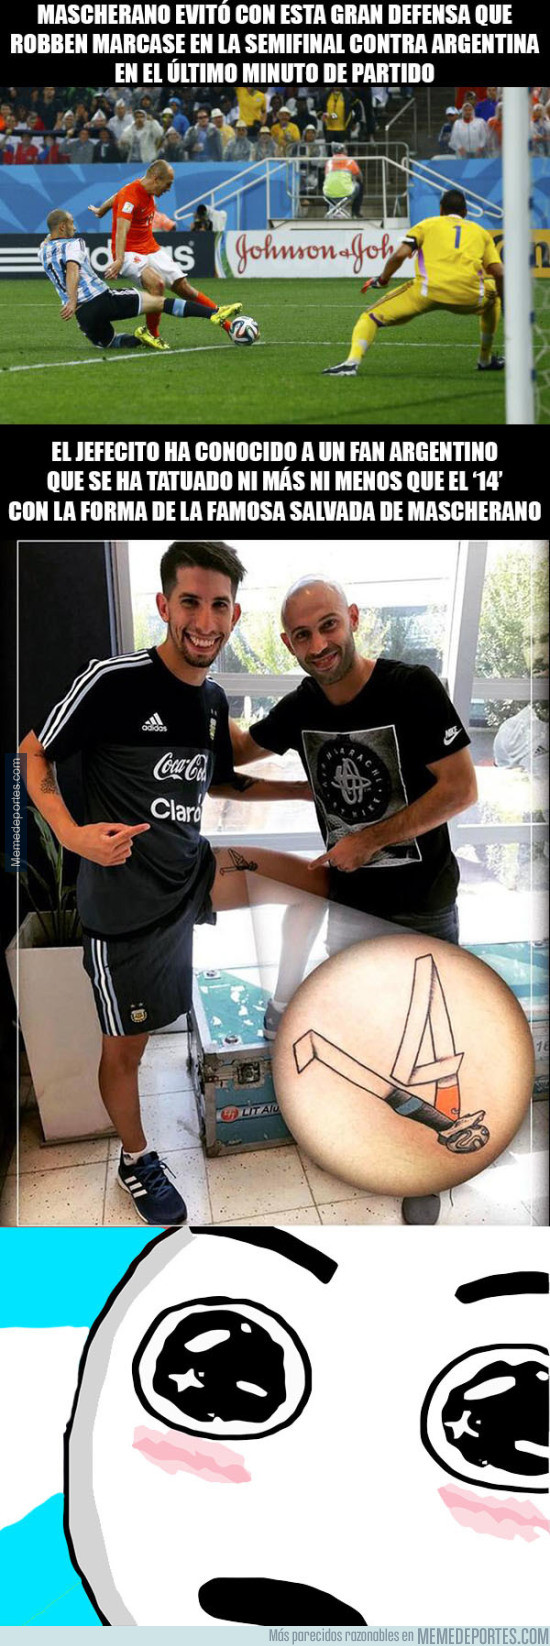 962431 - Mascherano conoce a un fan argentino con un tatuaje que le trae grandes recuerdos